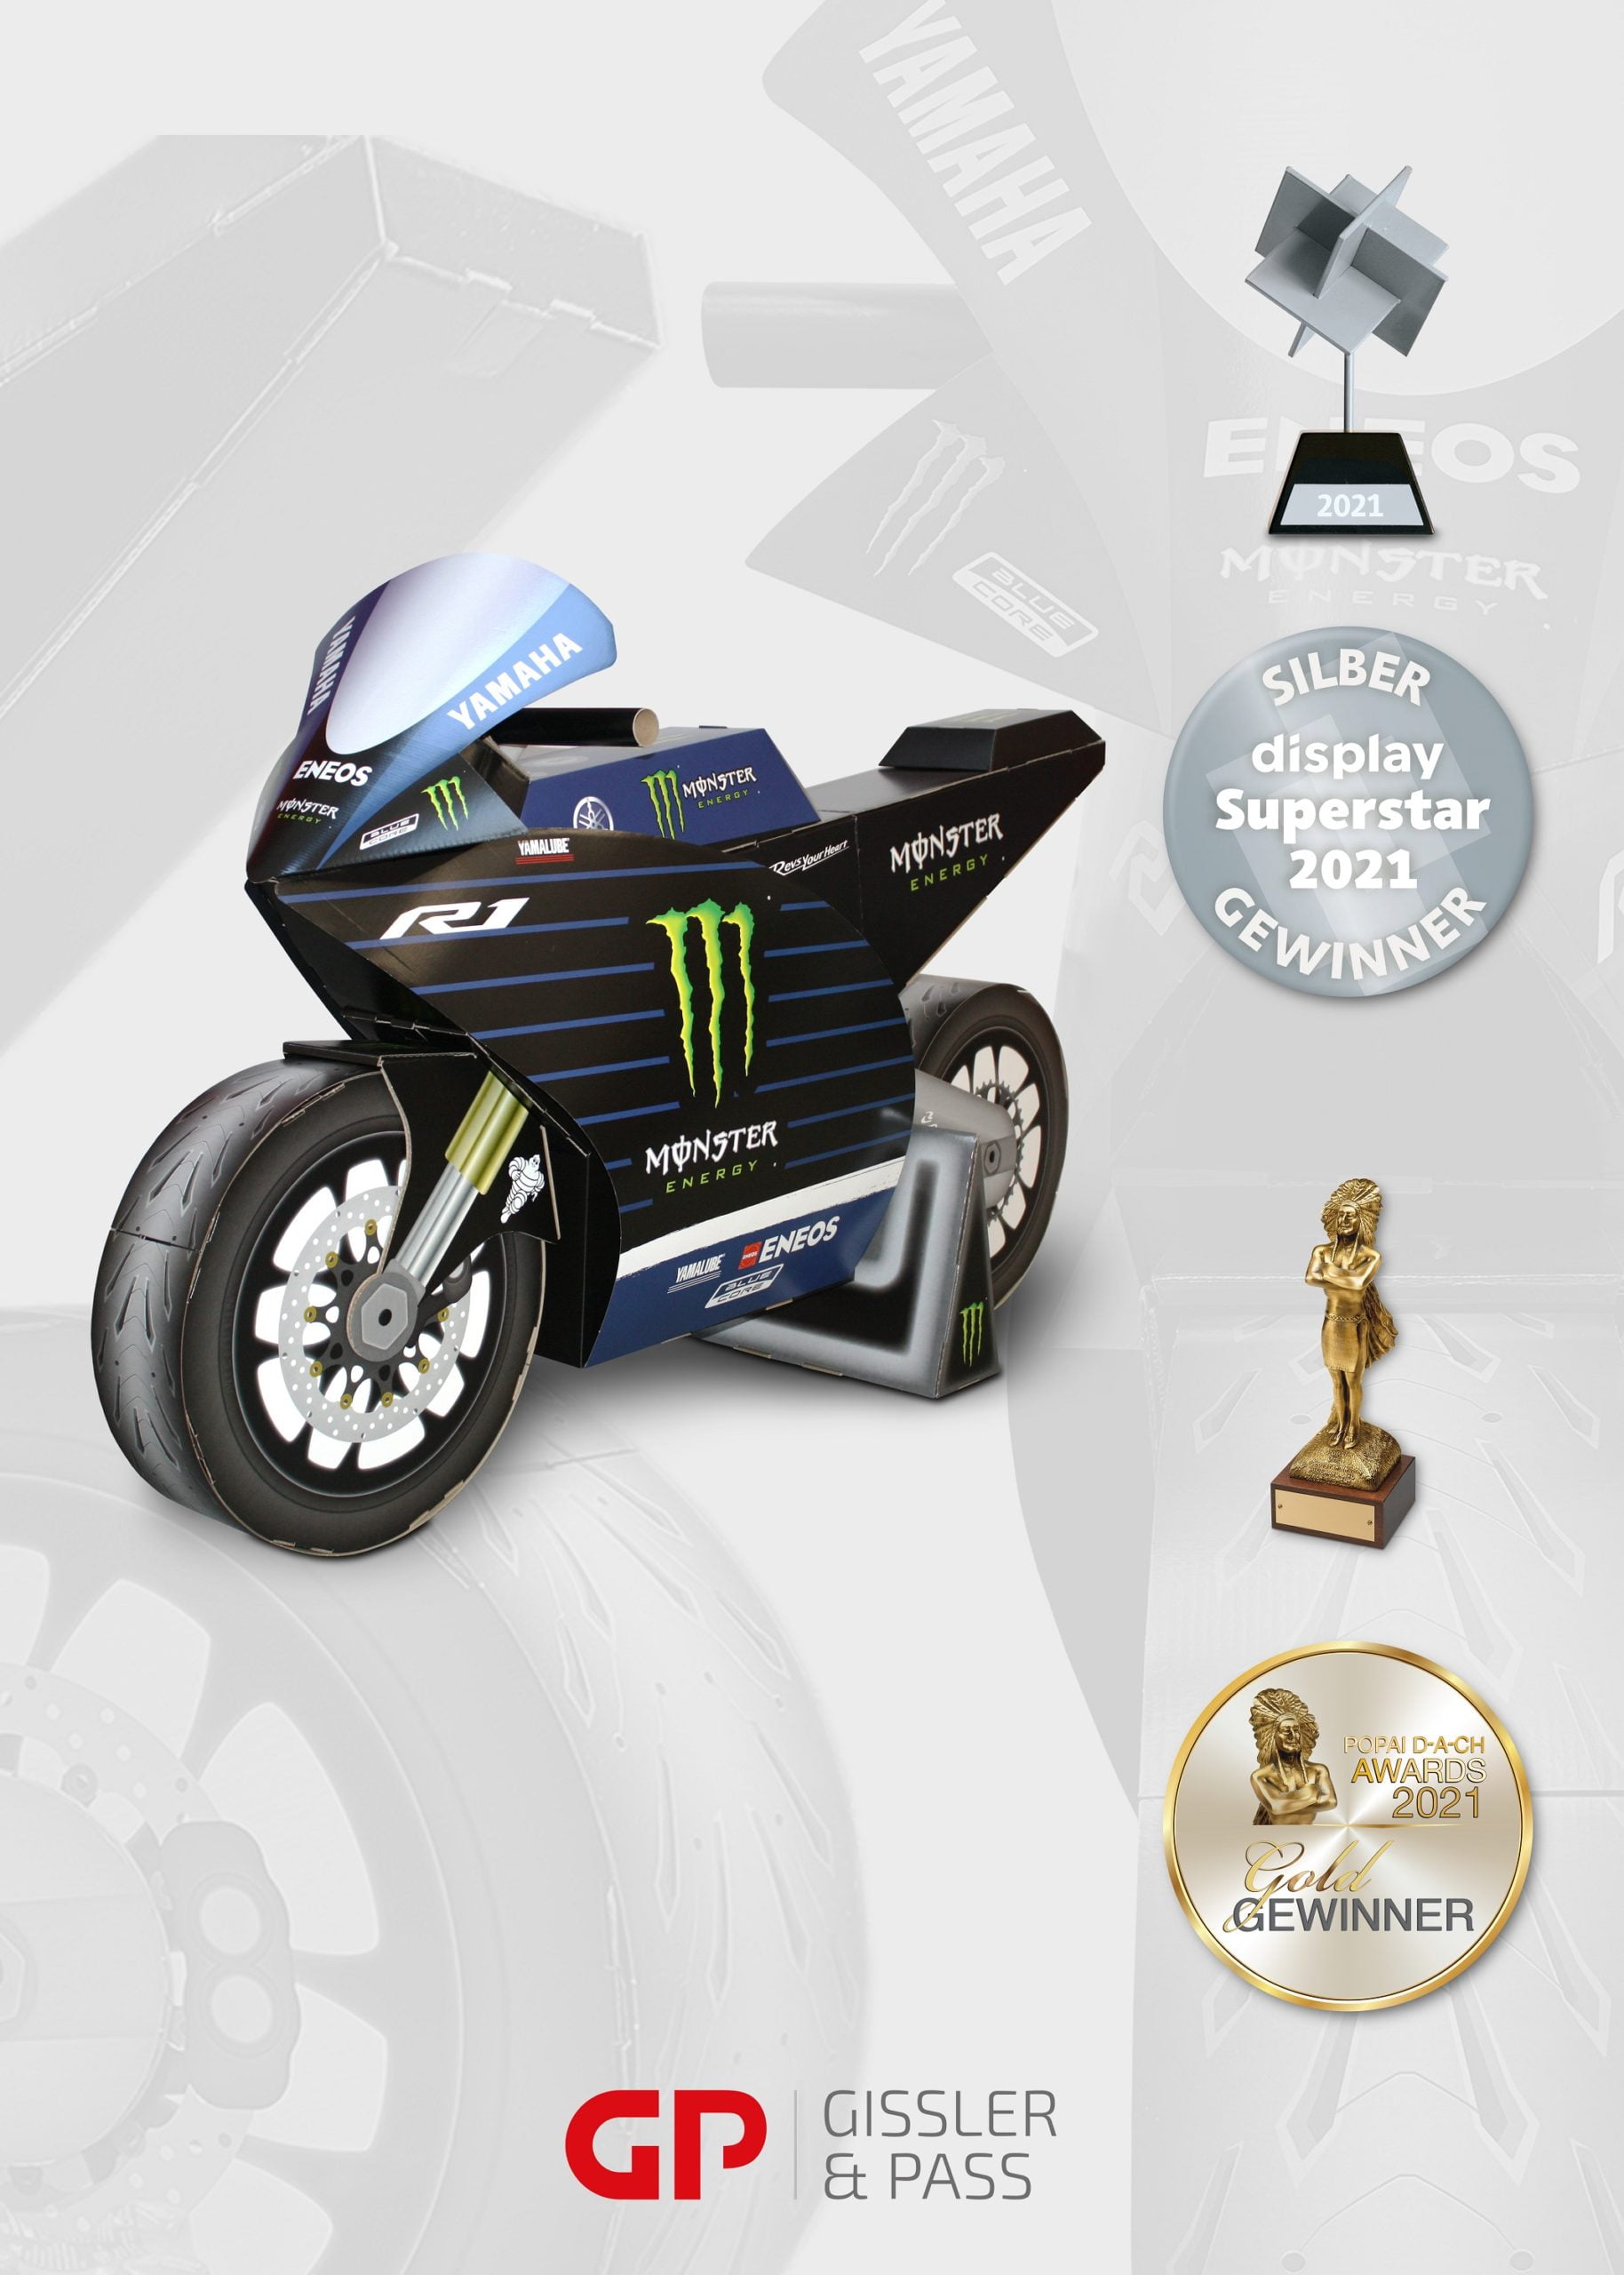 Award Poster 2022 Monsterbike klein scaled